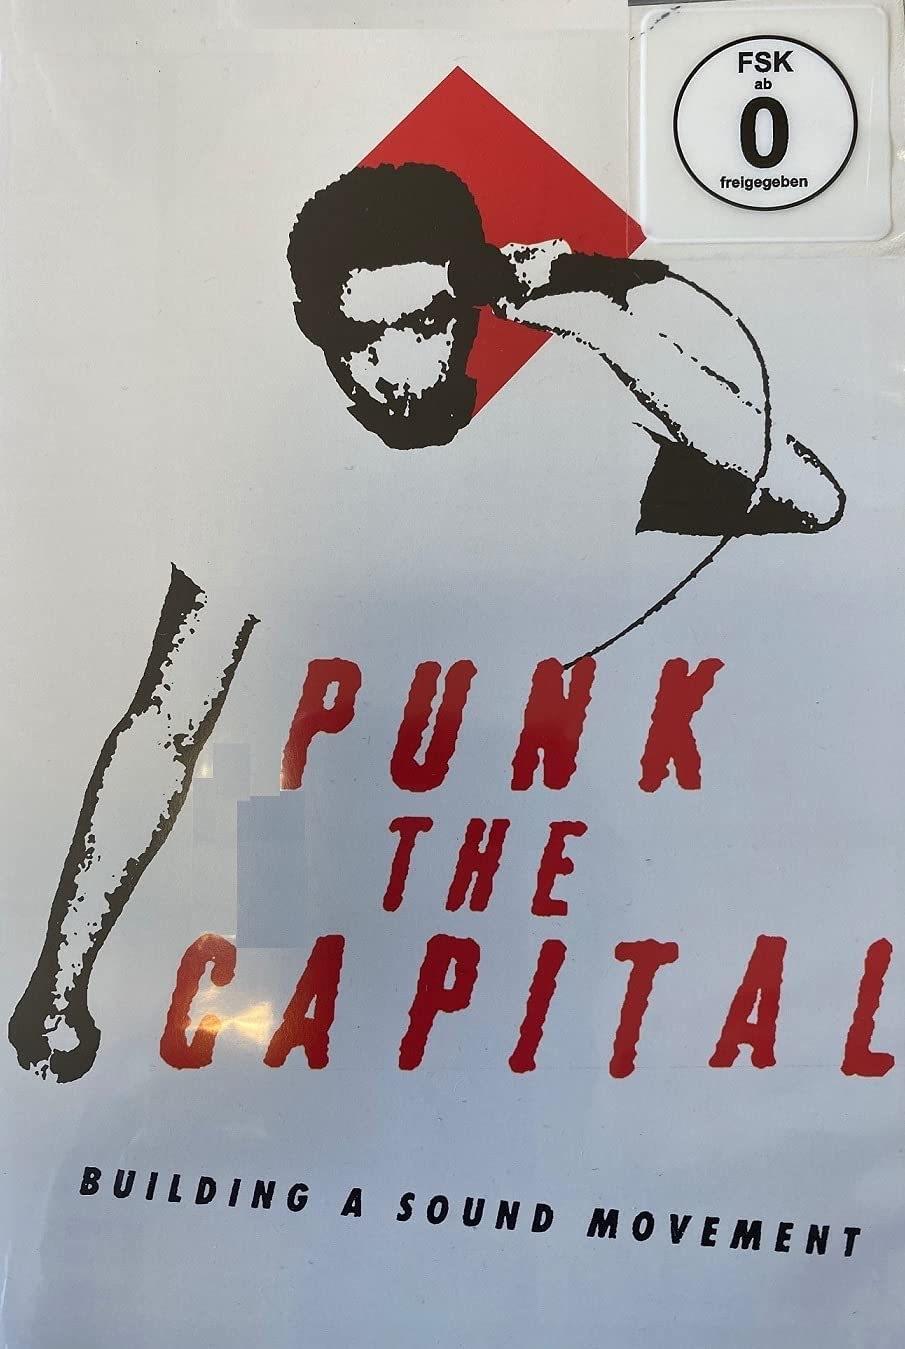 Punk The Capital: Building A Sound Movement - [DVD]